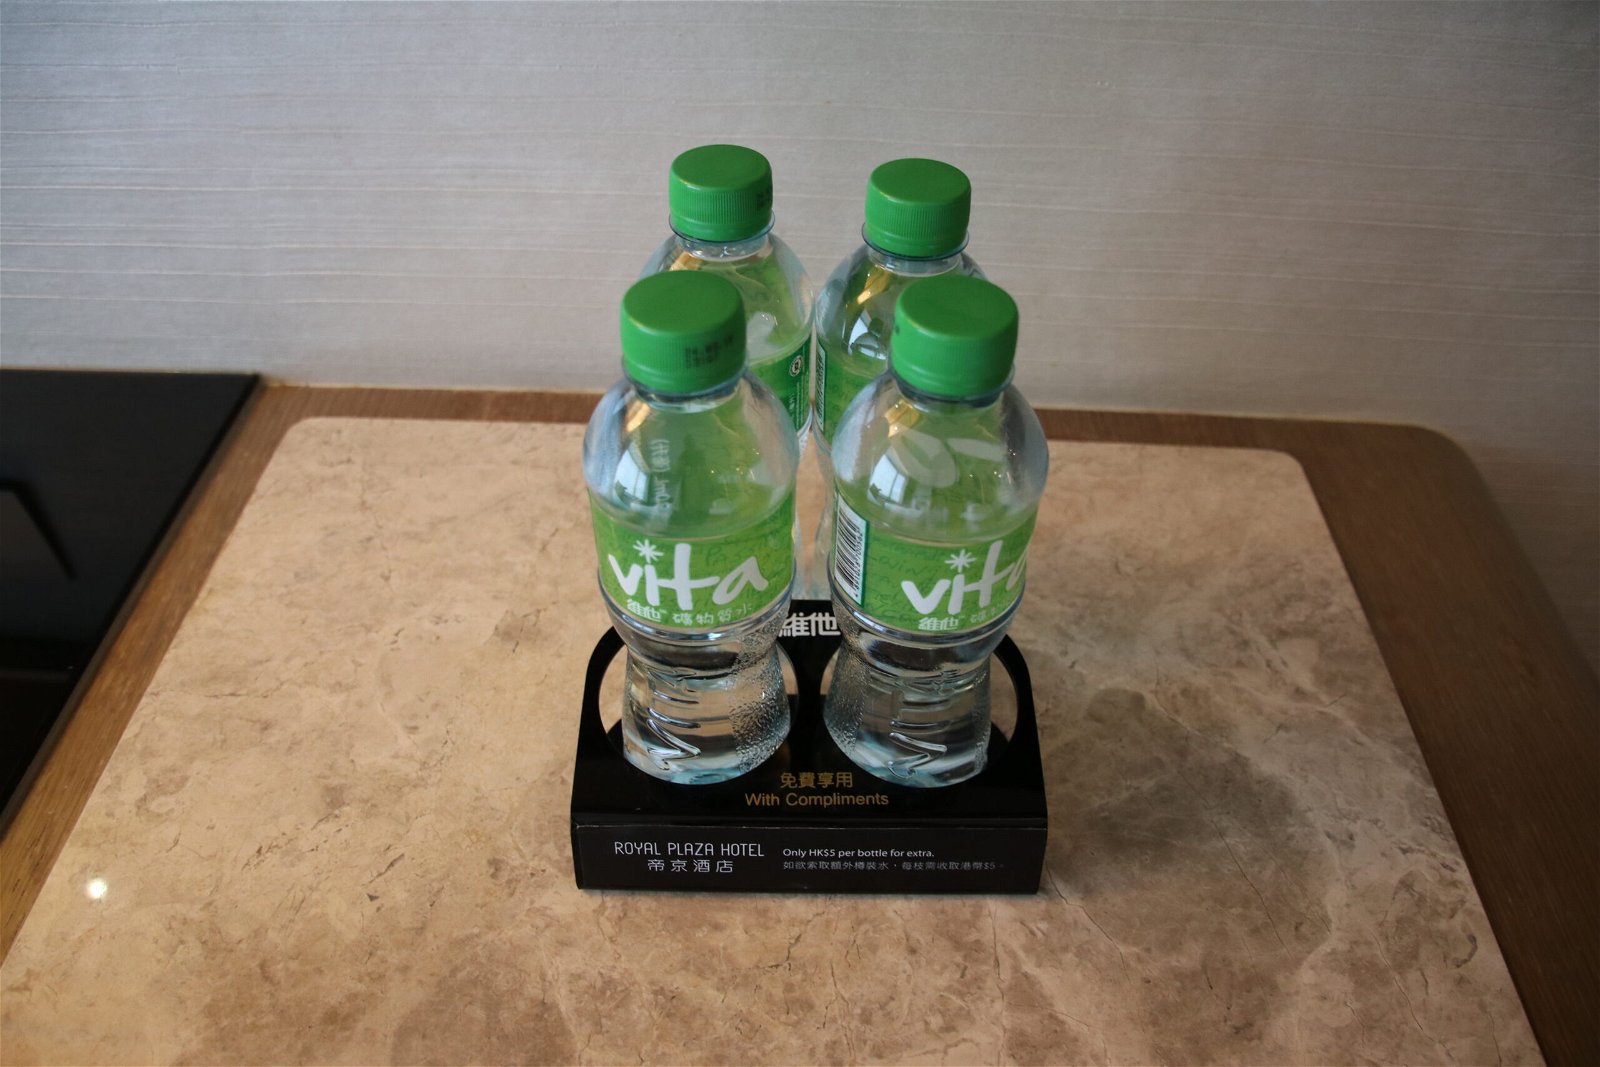 Royal Plaza Hotel water bottles